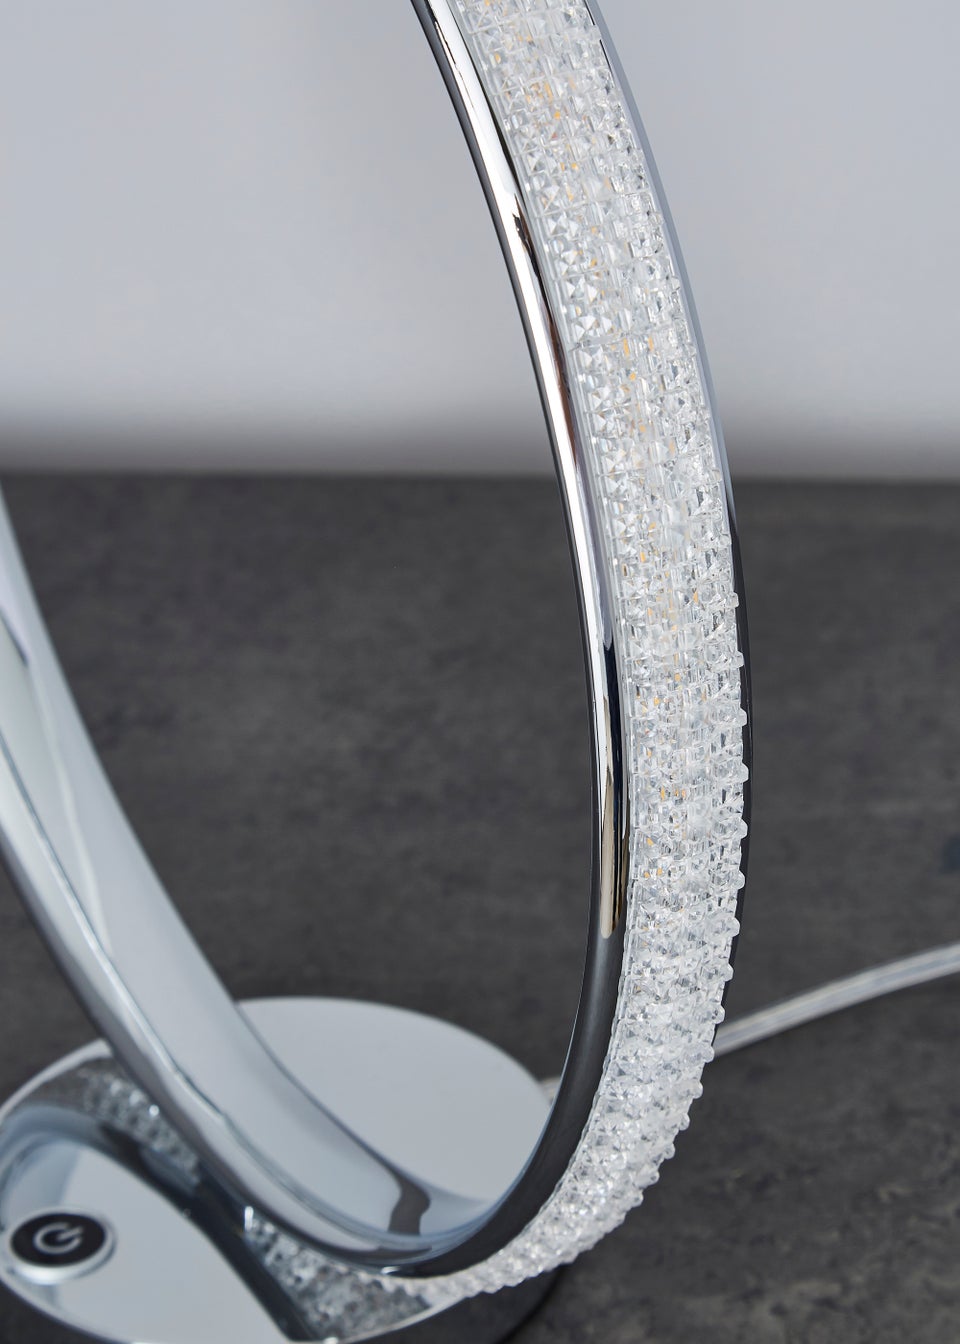 Inlight LED Ring Table Lamp (36.5cm x 35cm x 13cm)